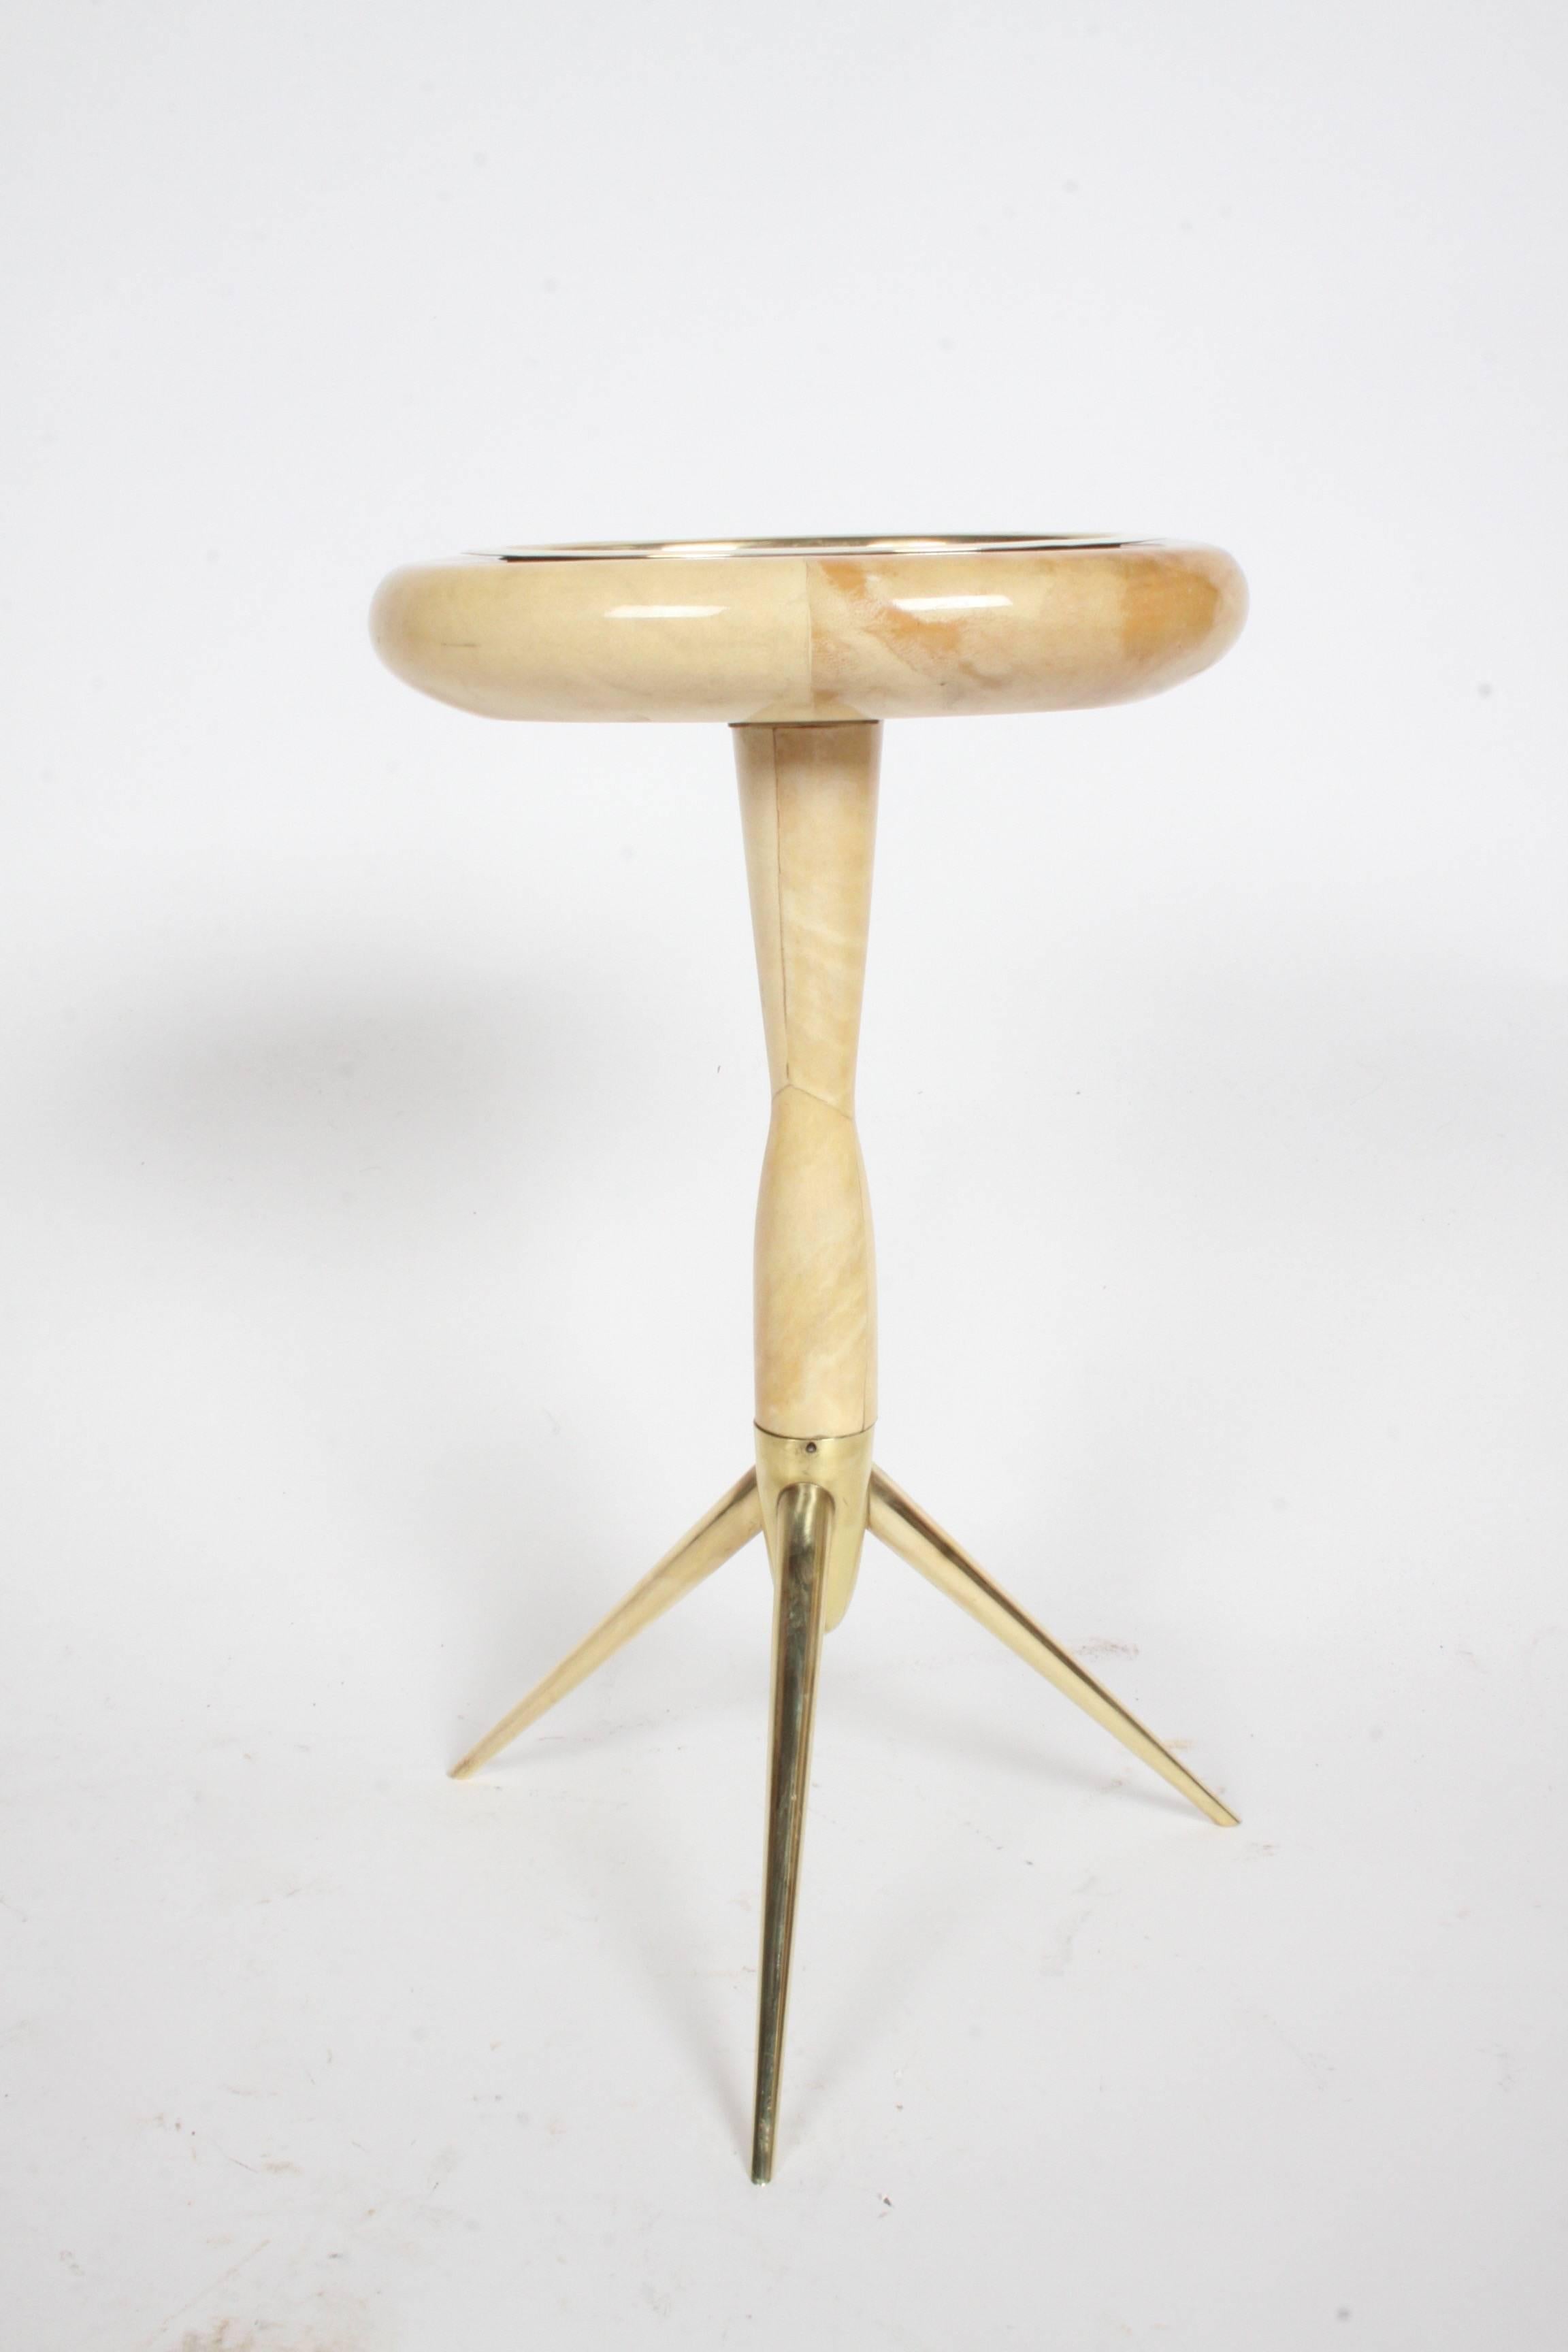 Aldo Tura Italy Goatskin Parchment Side Table with Brass Tripod Legs 1